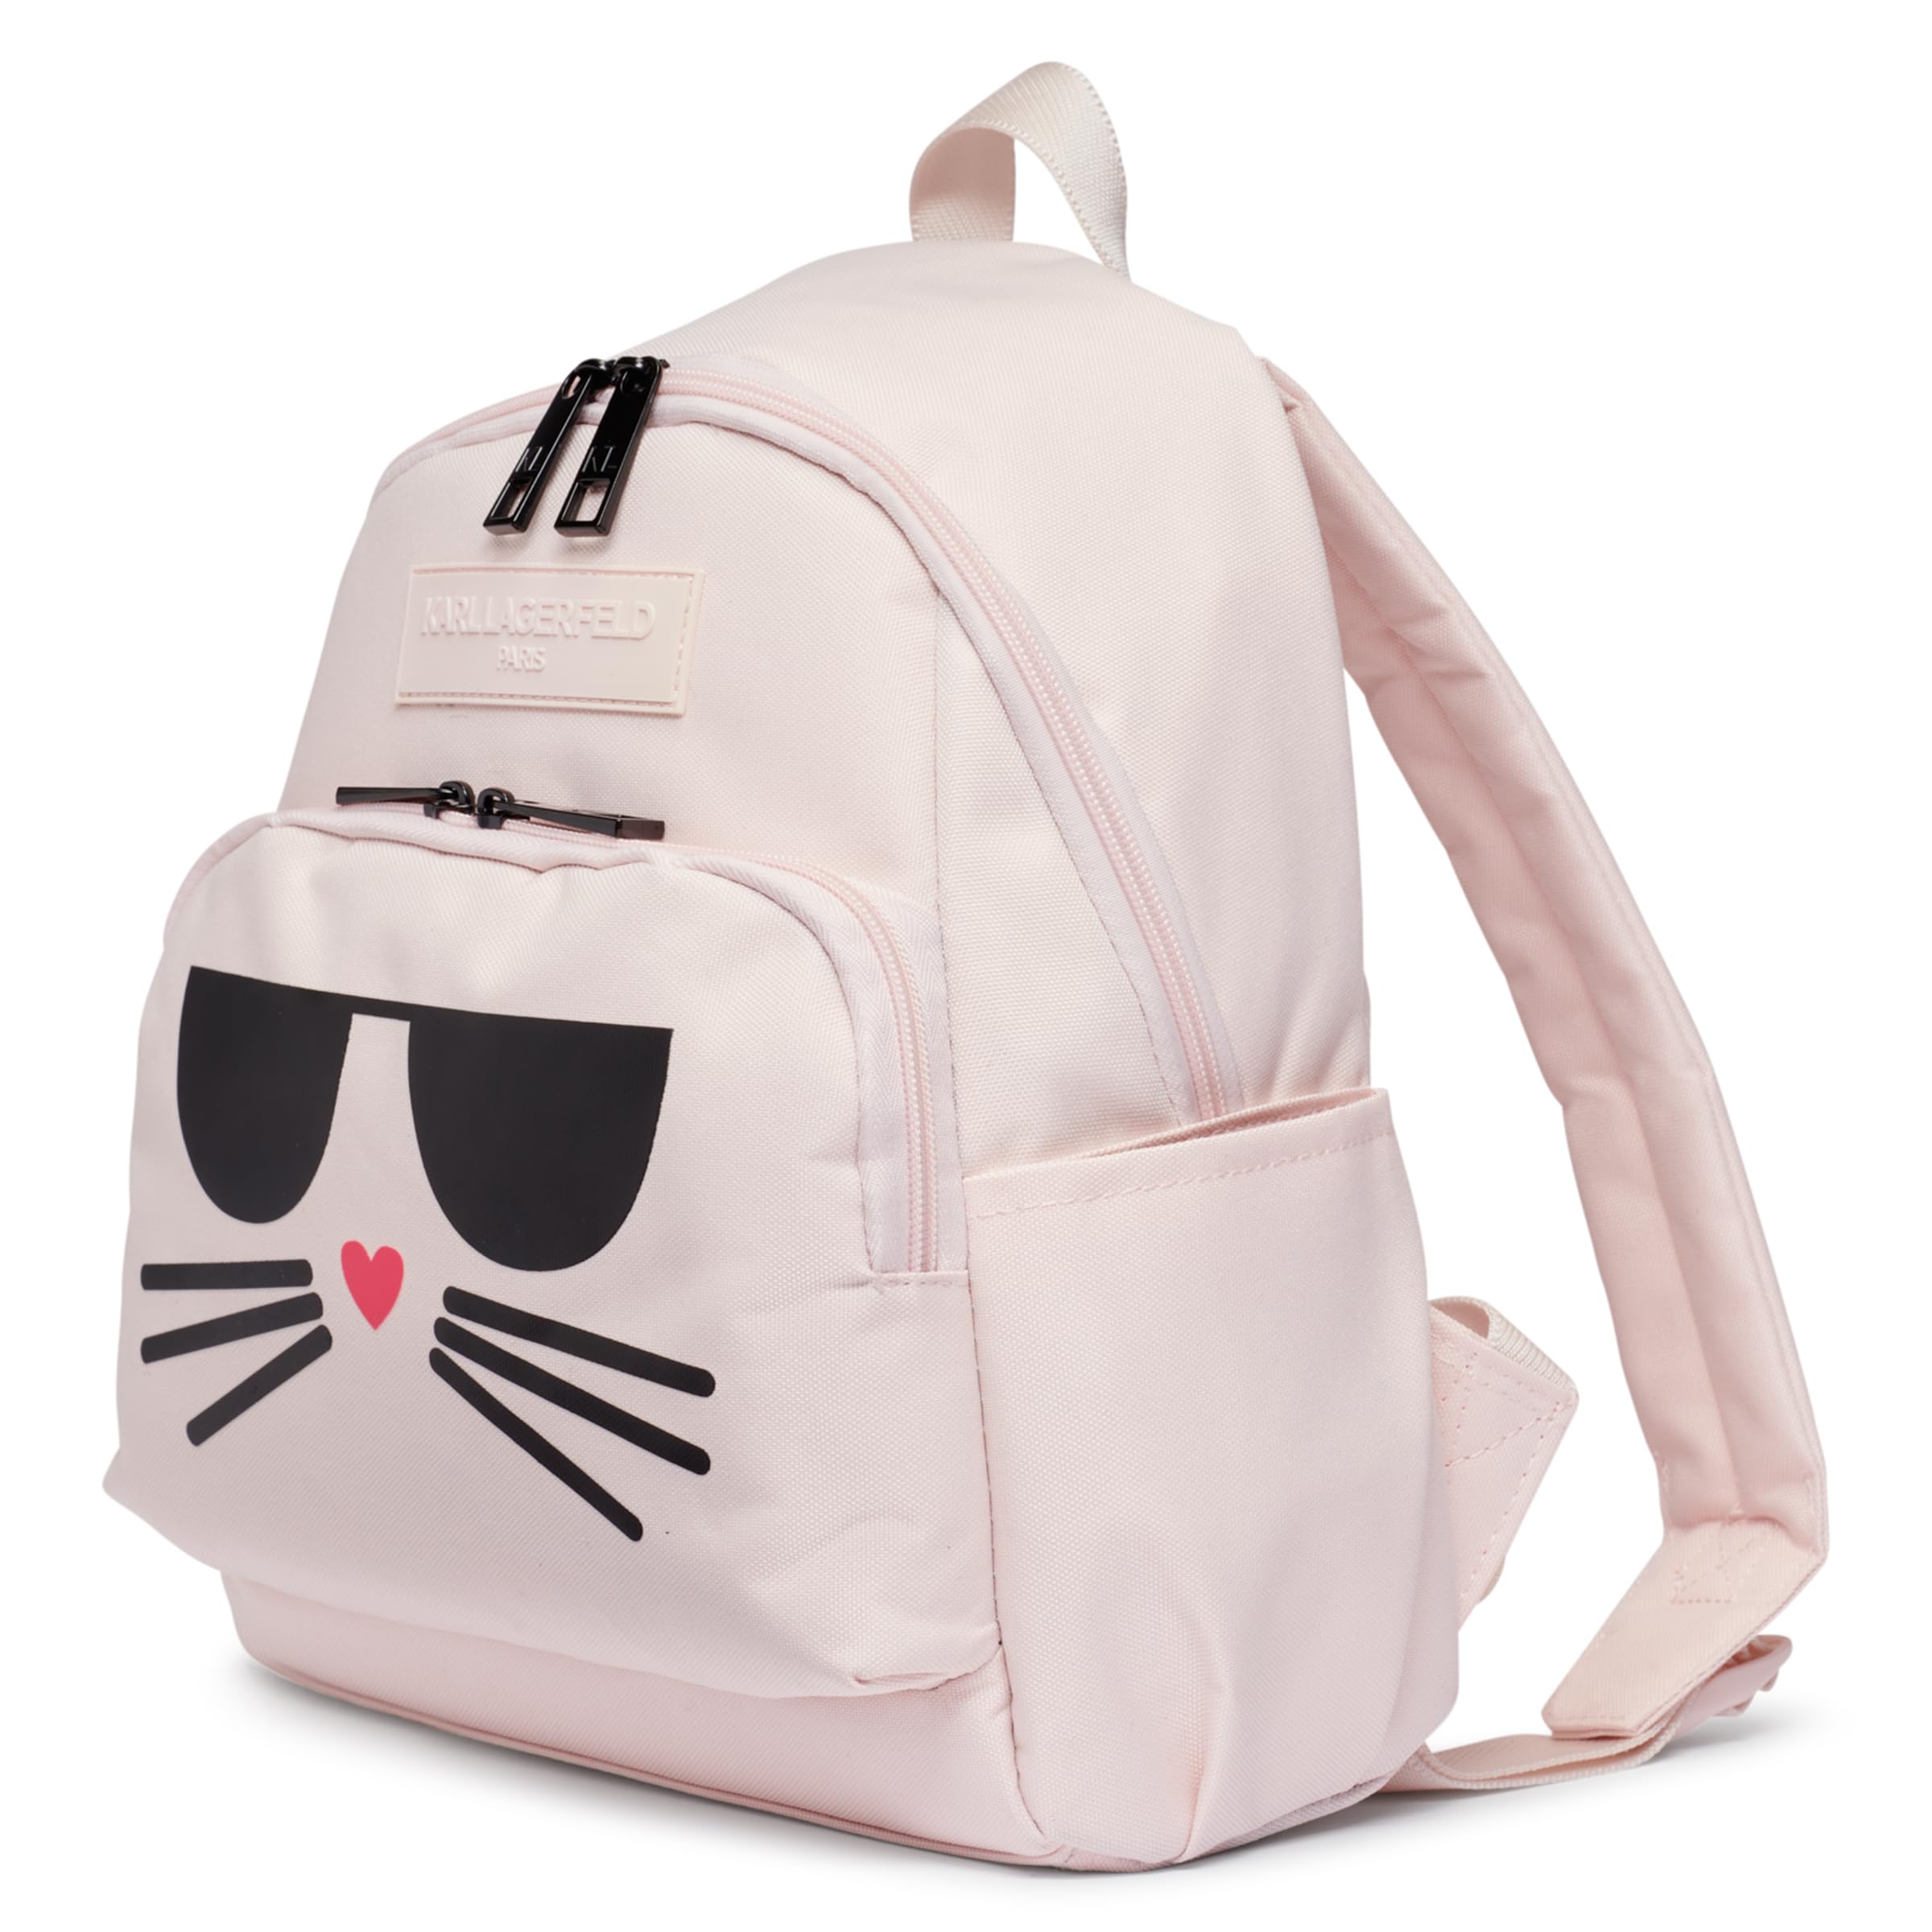 Karl Lagerfeld Paris Women's Lightweight Cat Backpack, Blush, One Size